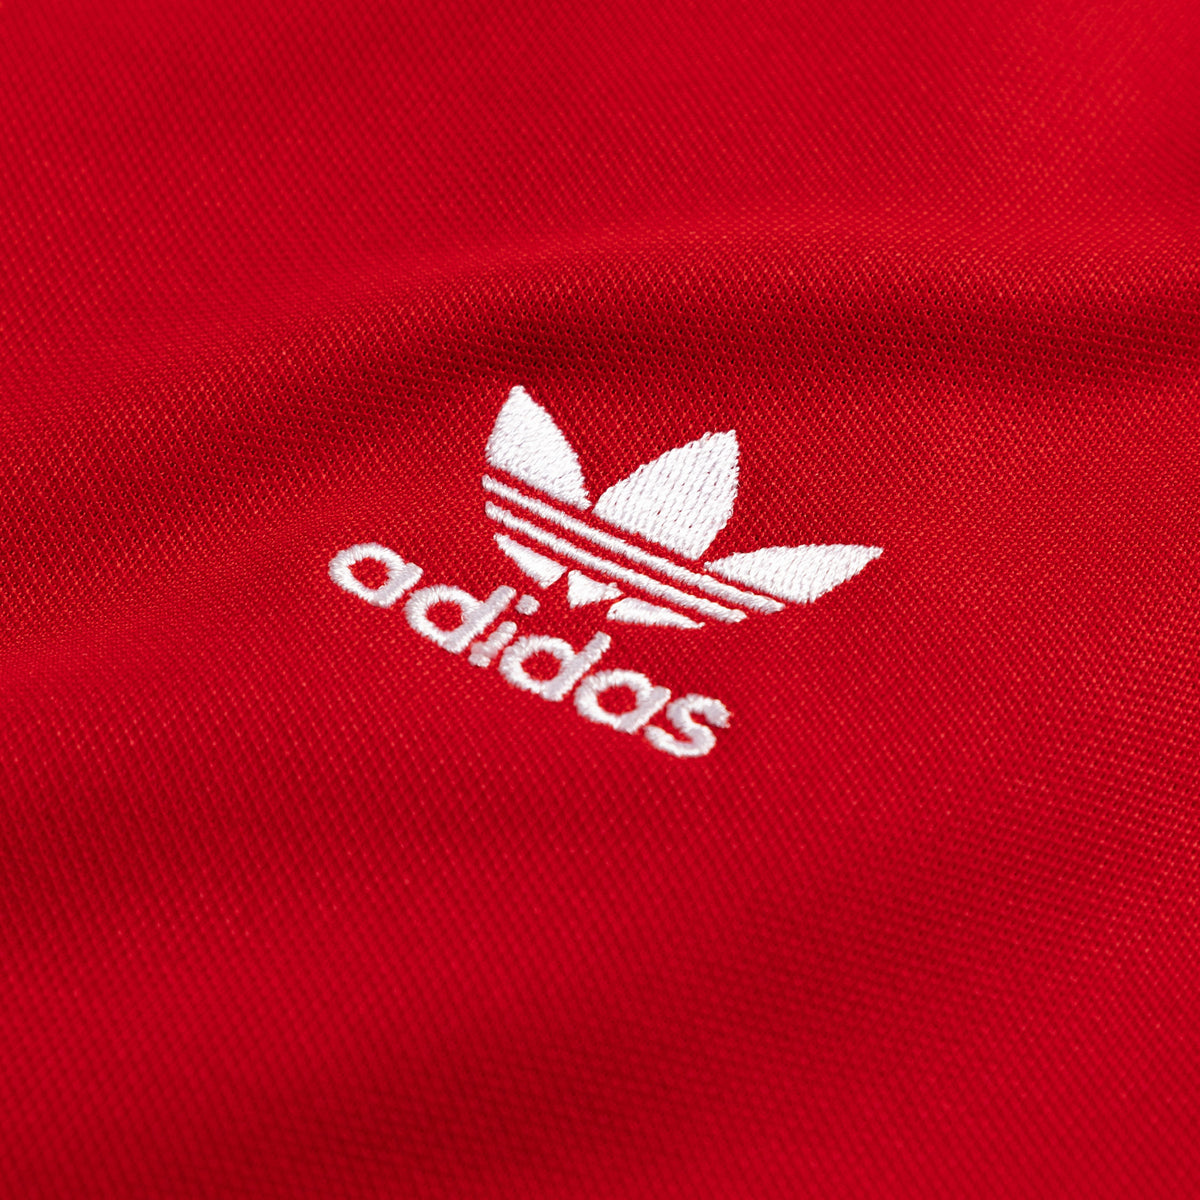 buy at Adidas Online Originals Jacke Adicolor – Store! now Beckenbauer Asphaltgold